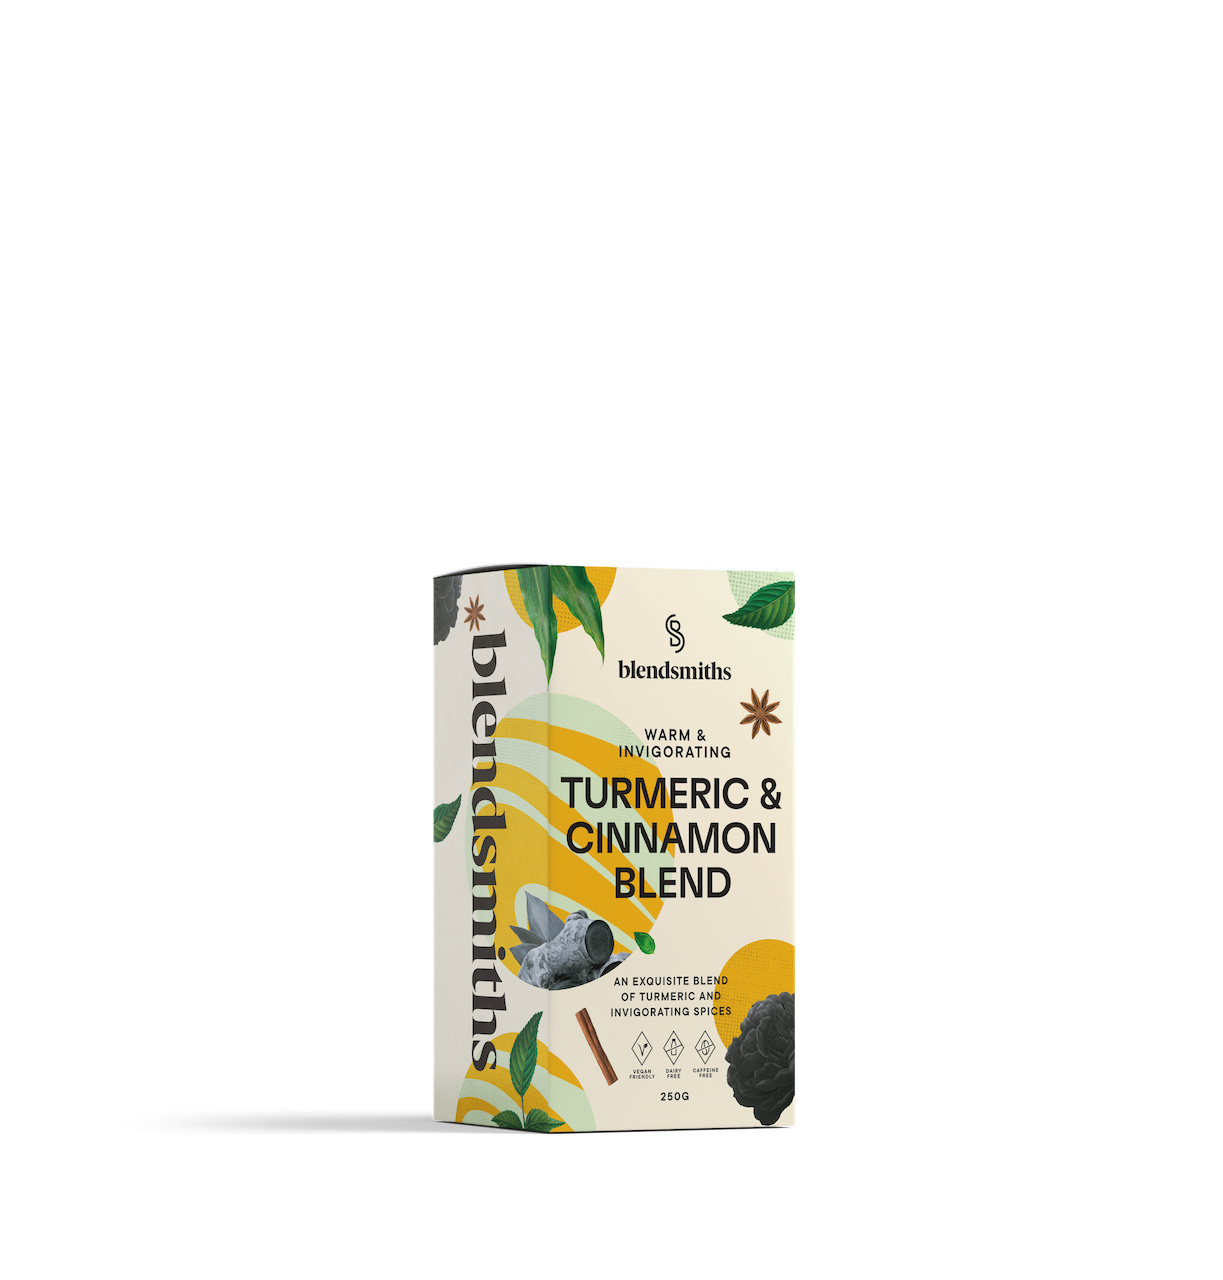 Turmeric & Cinnamon Blend